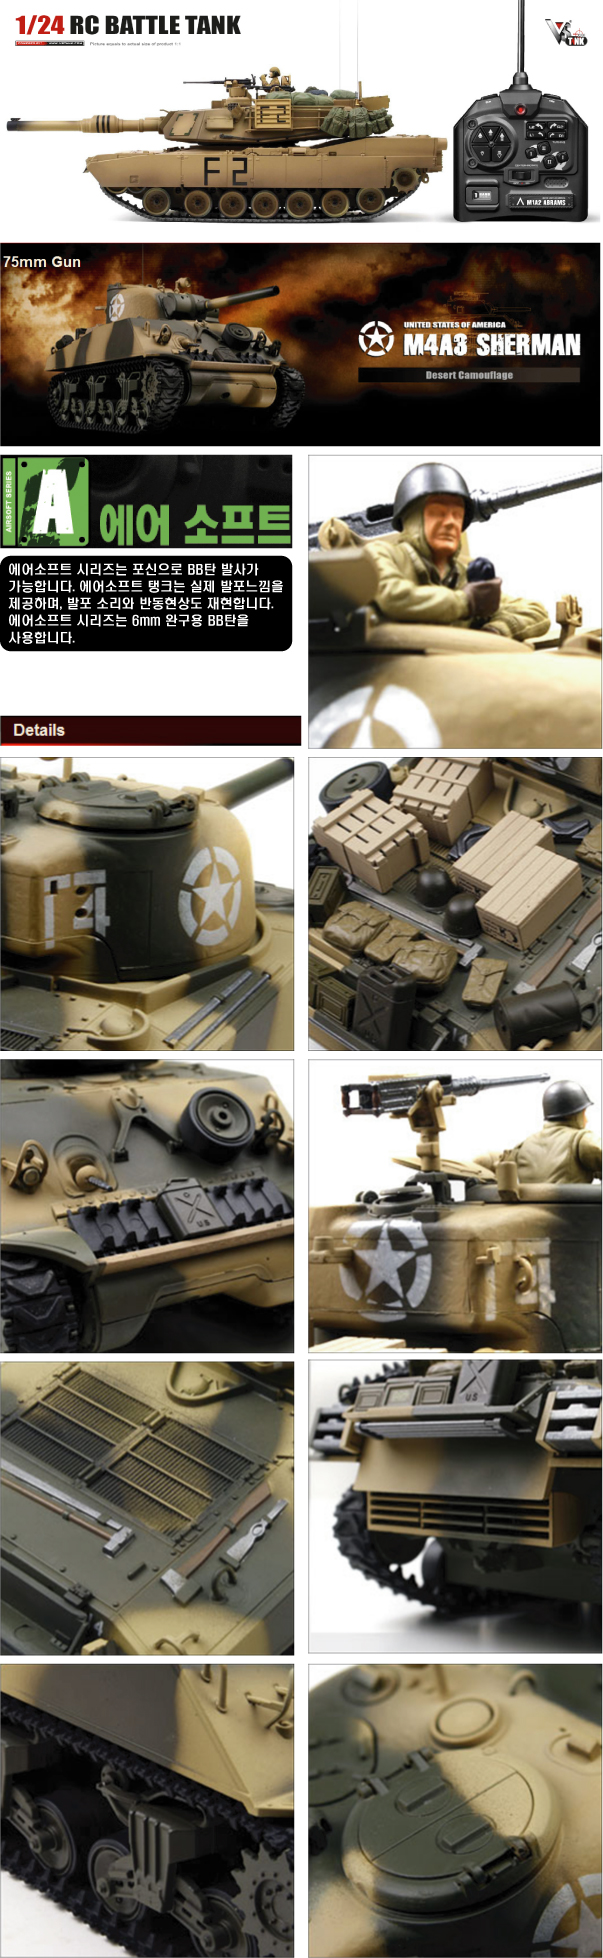 tank image3.jpg